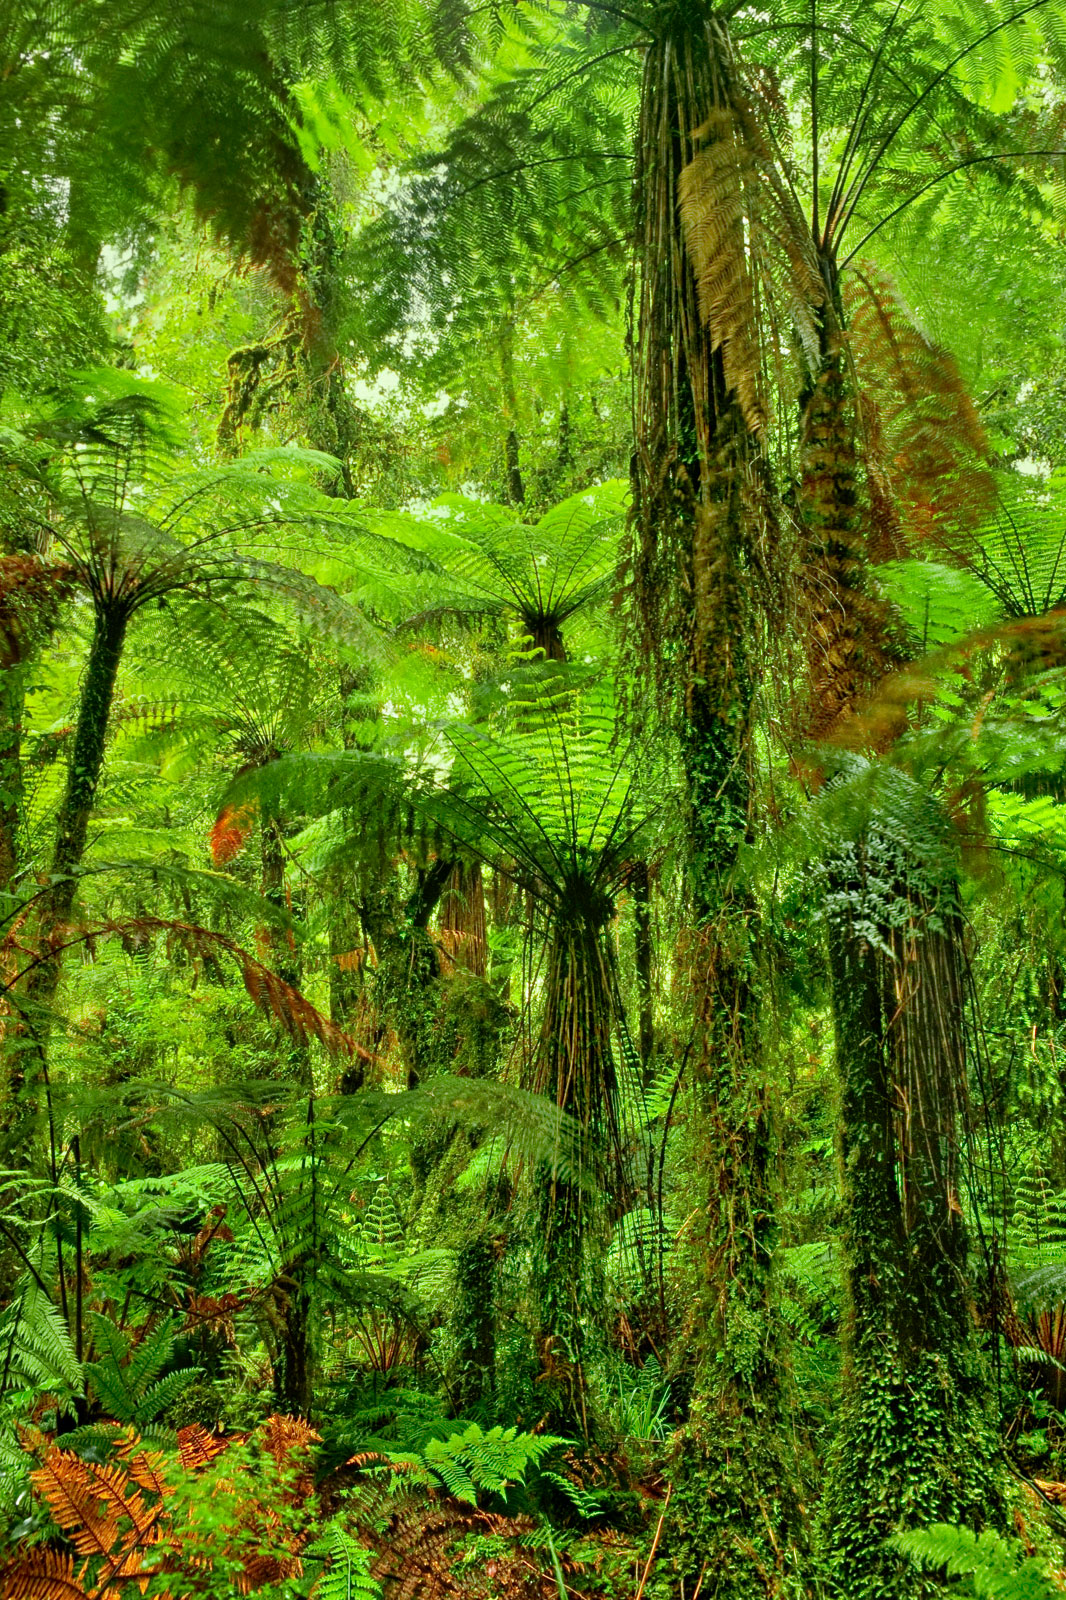 Tree ferns in forest, Whirinaki Conservation Park, New Zealand